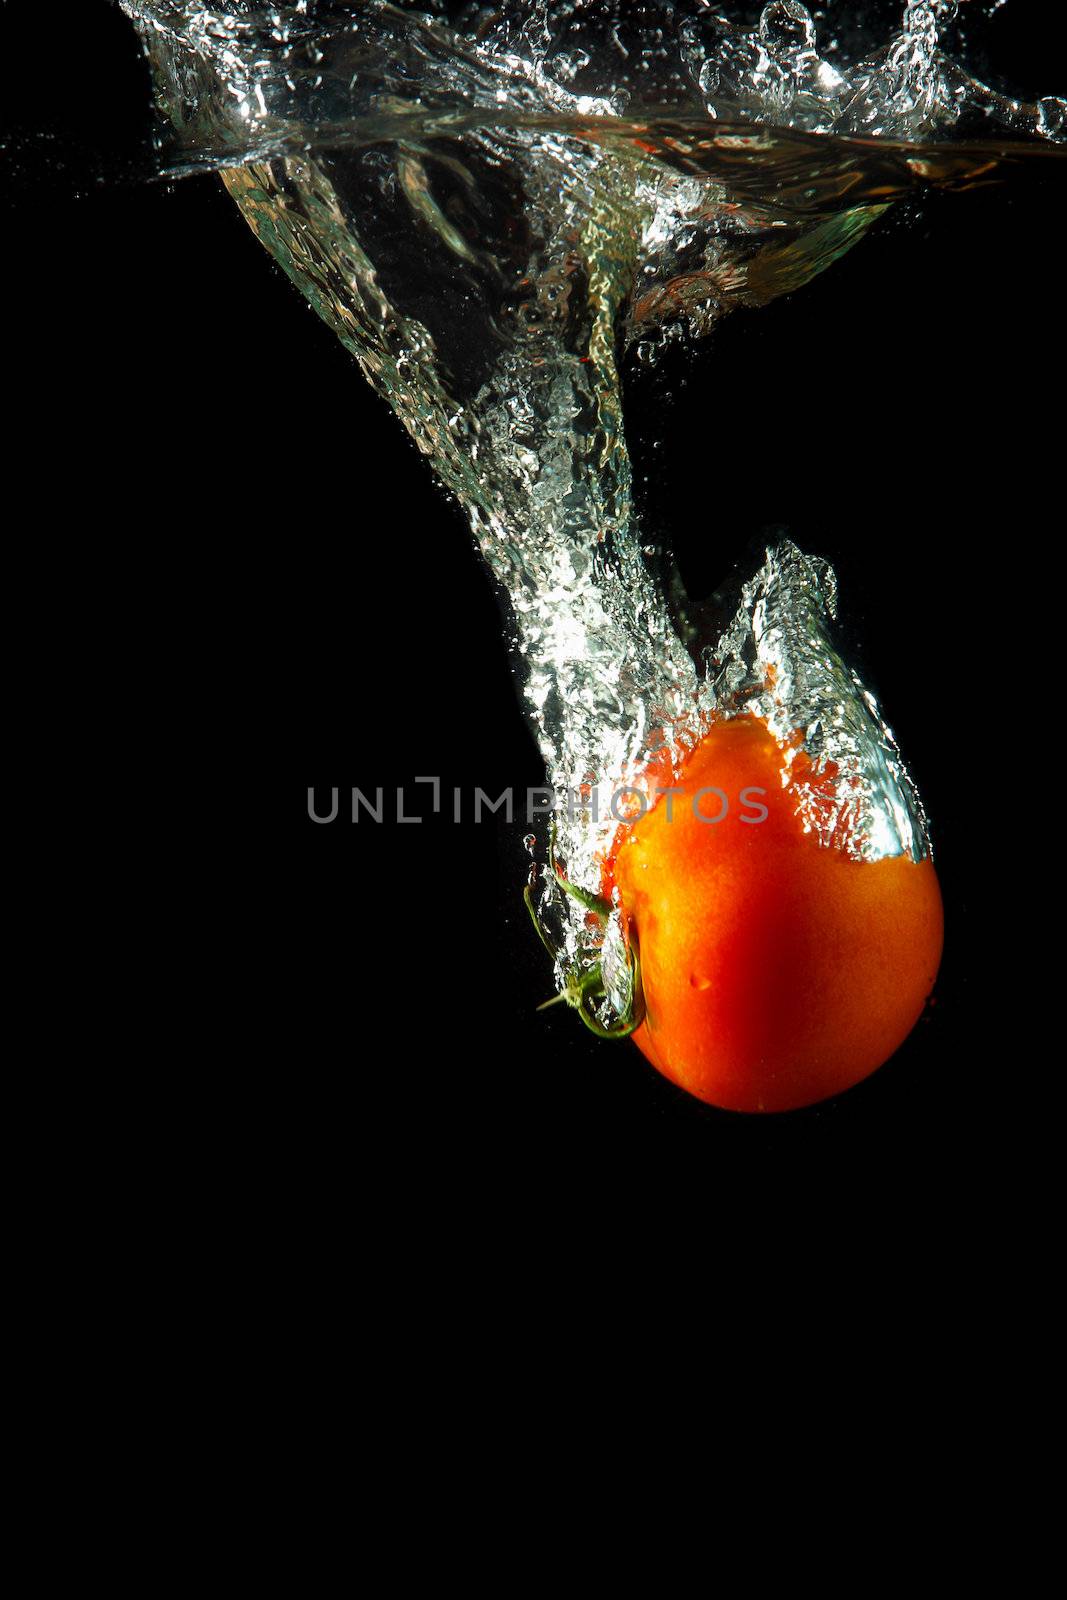 fresh tomato under water by sergey_nivens